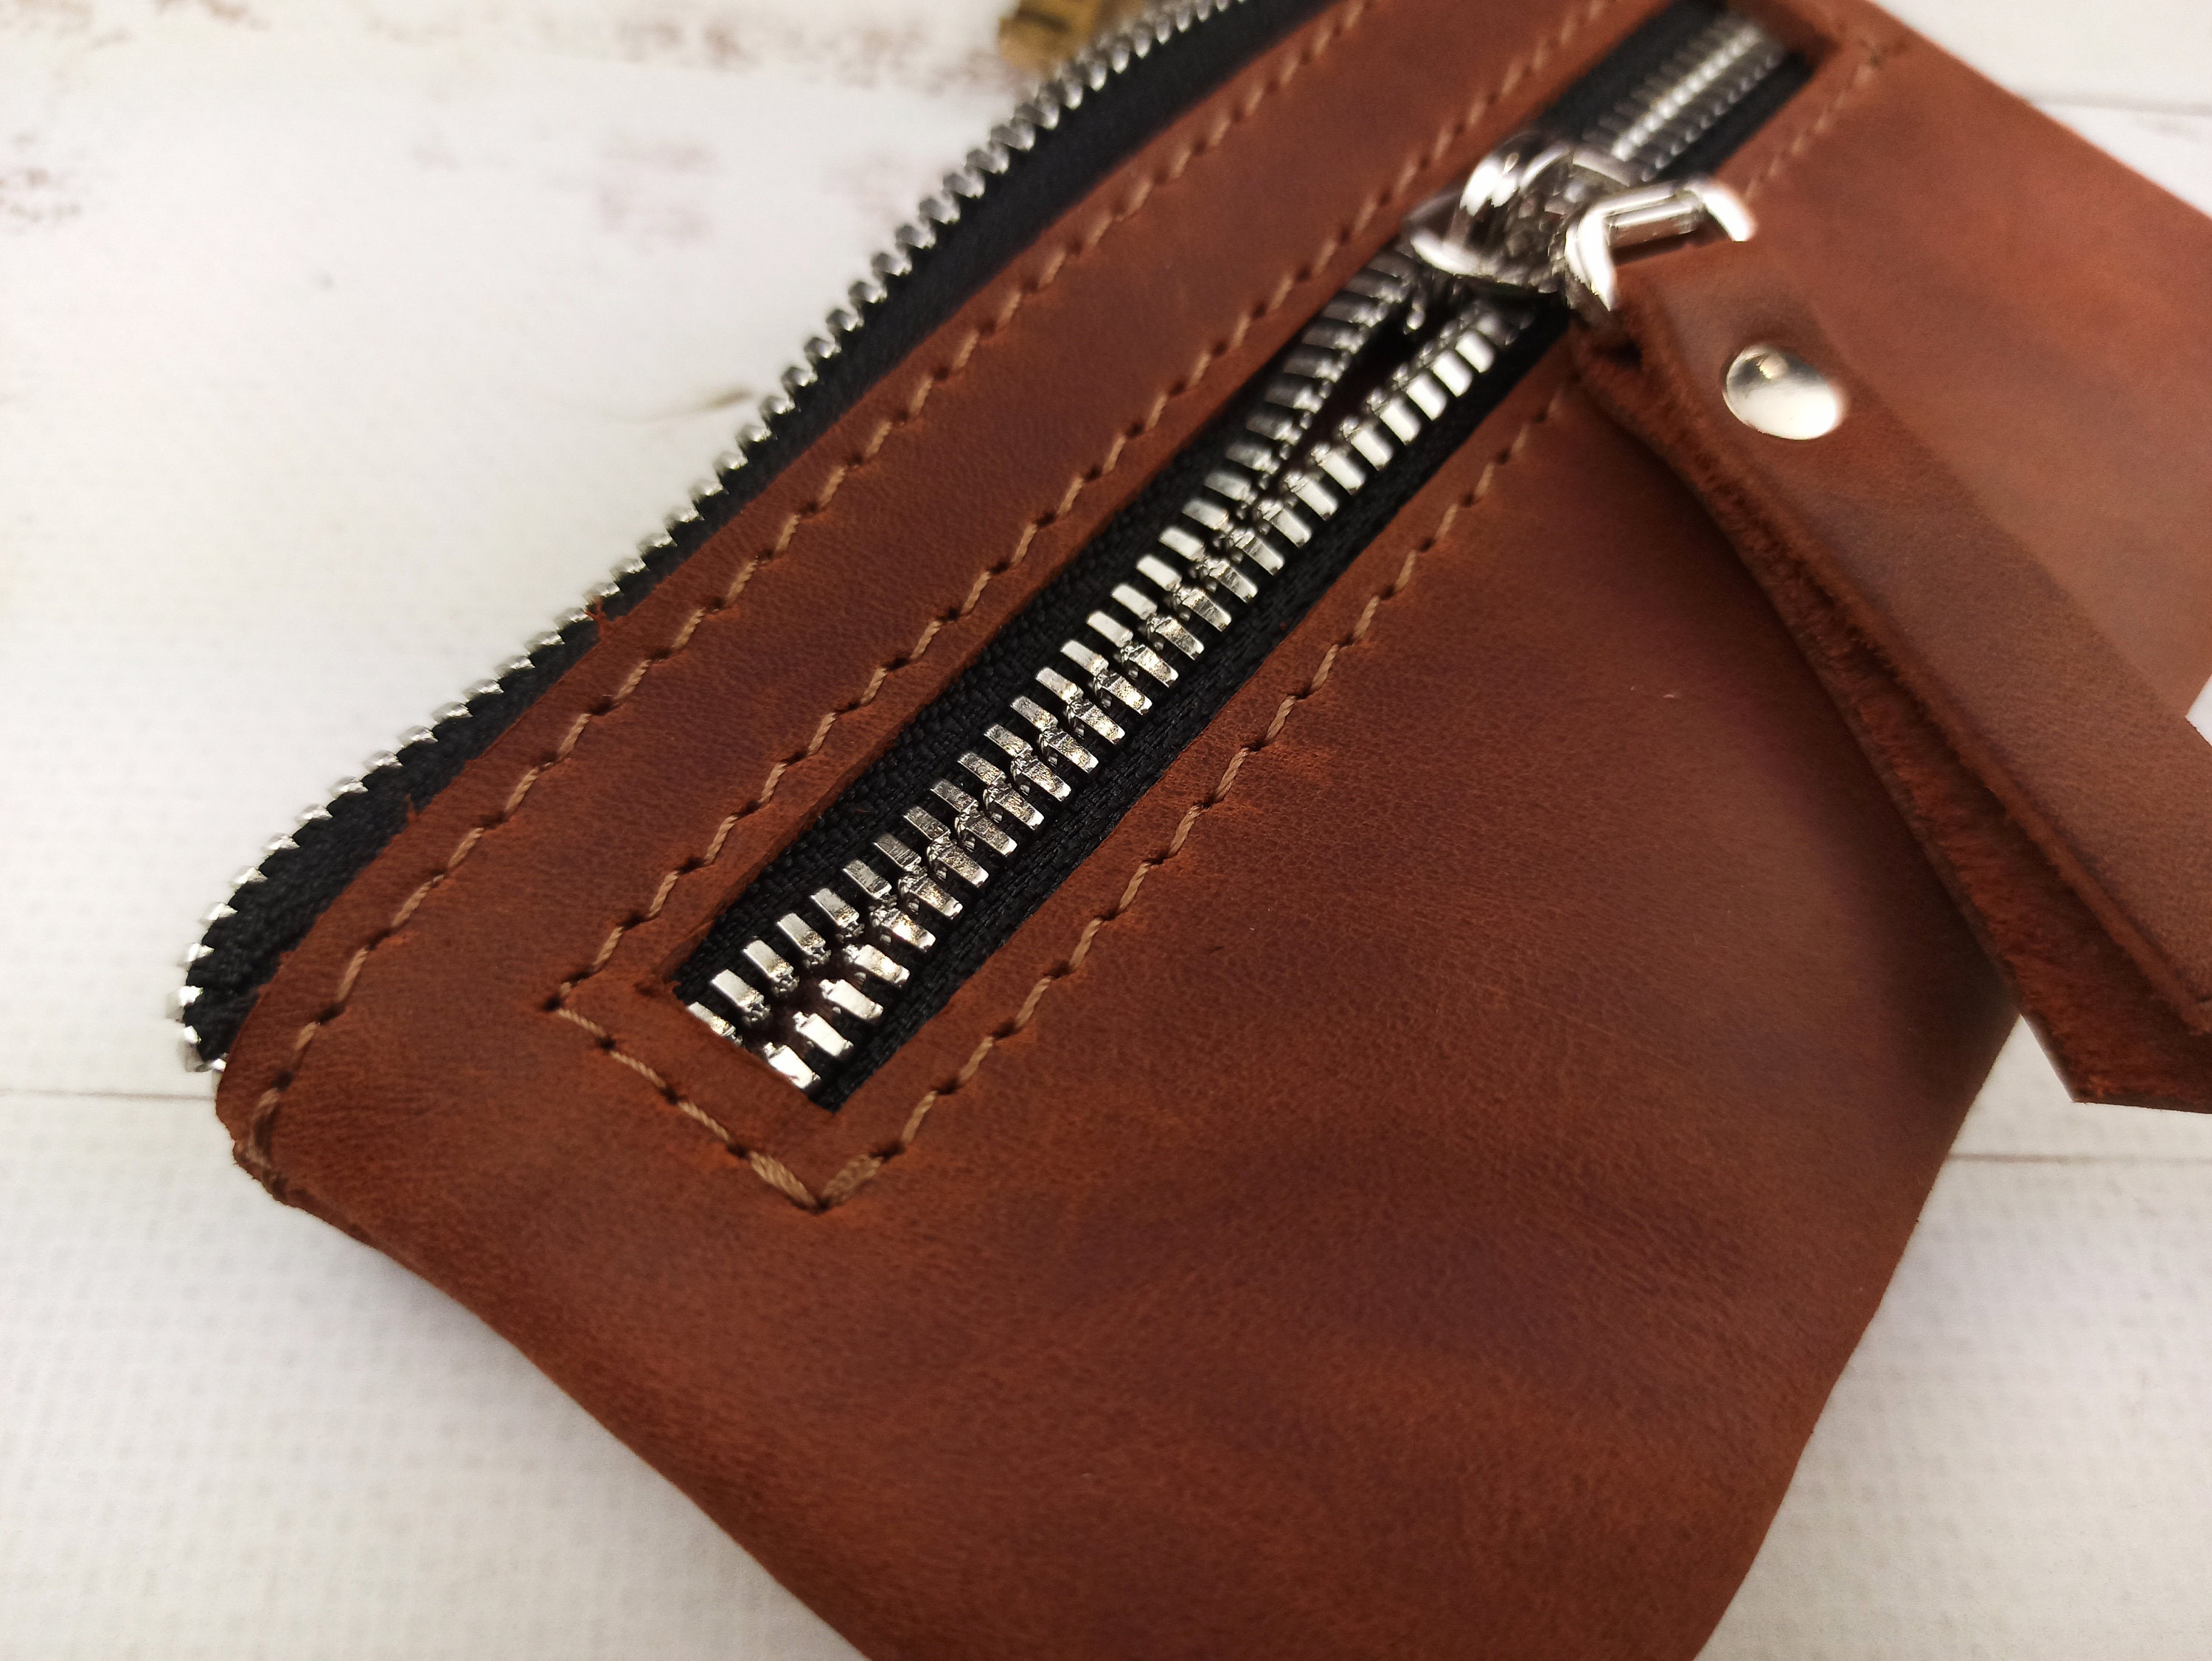 Leather key case / key organizer / wallet | Etsy